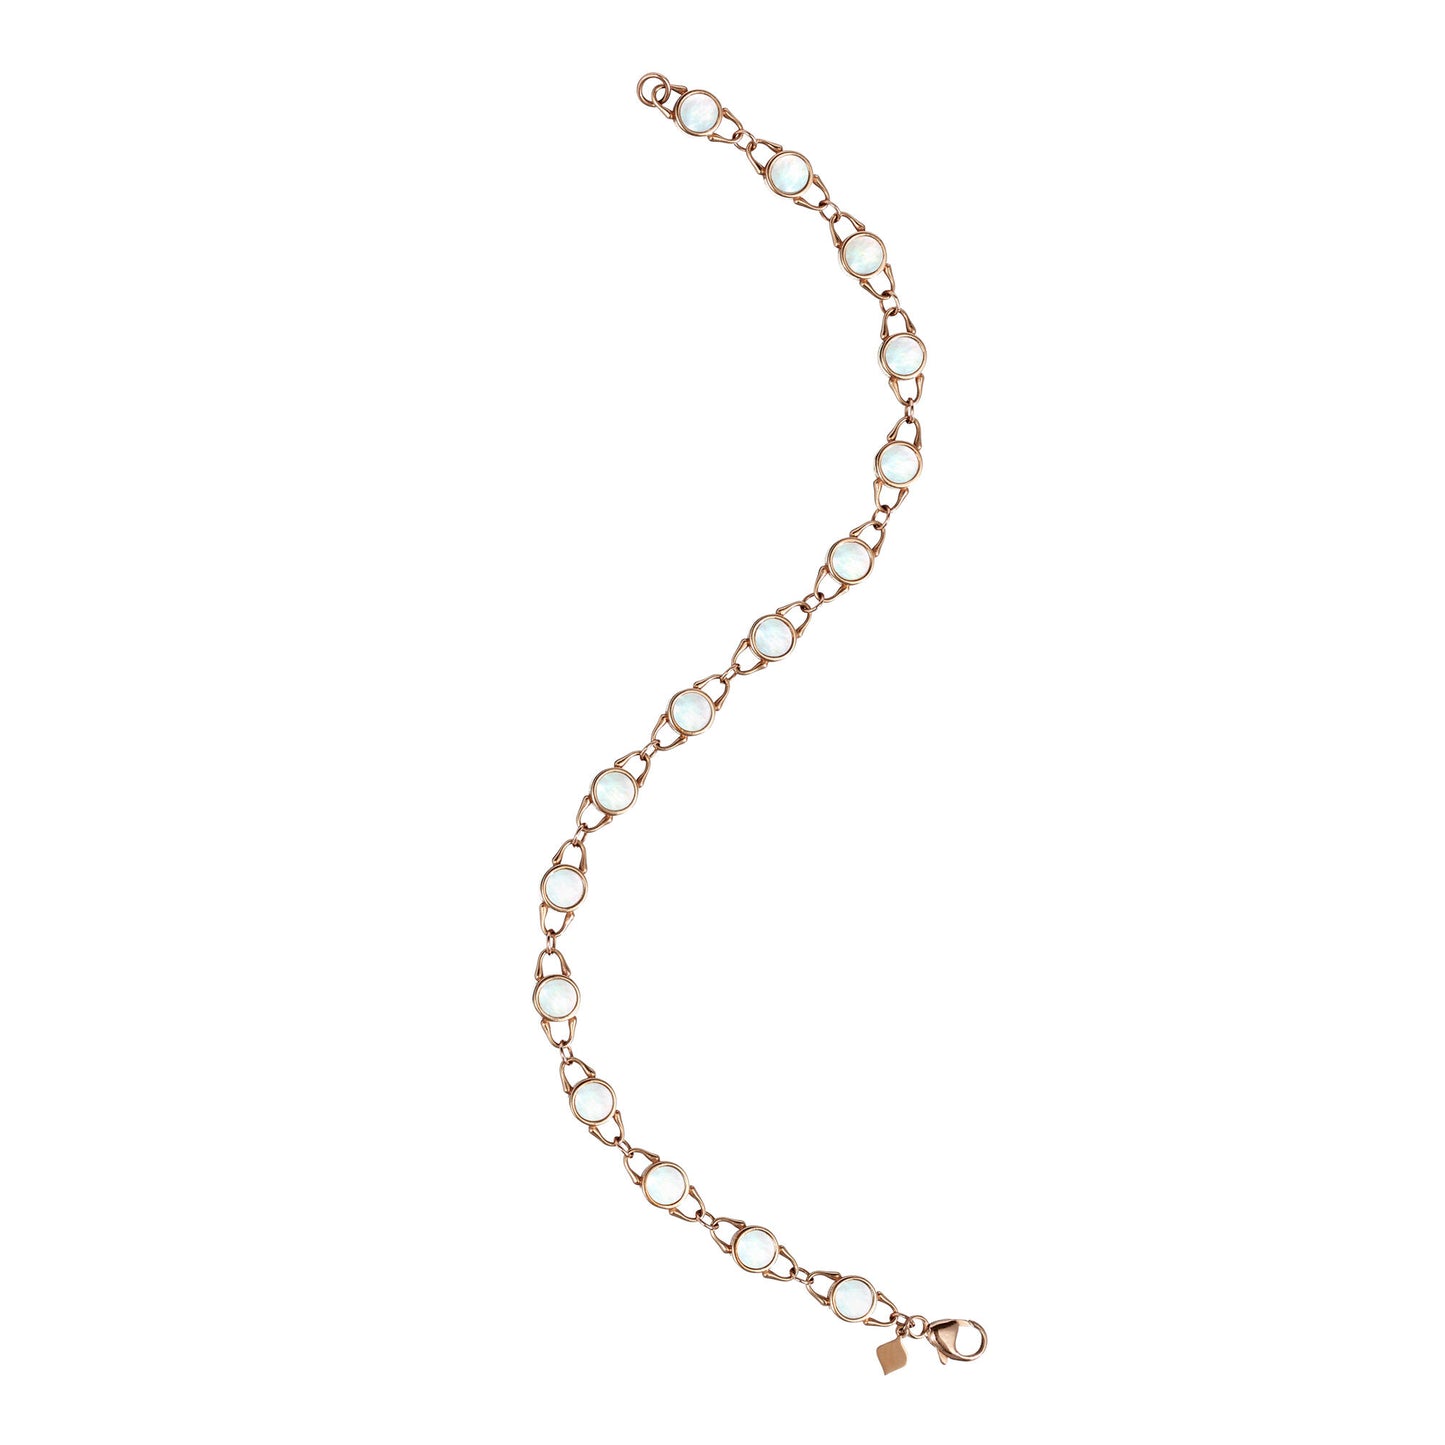 TreasureLock Mother-of-Pearl Bracelet 4mm in Rose Gold